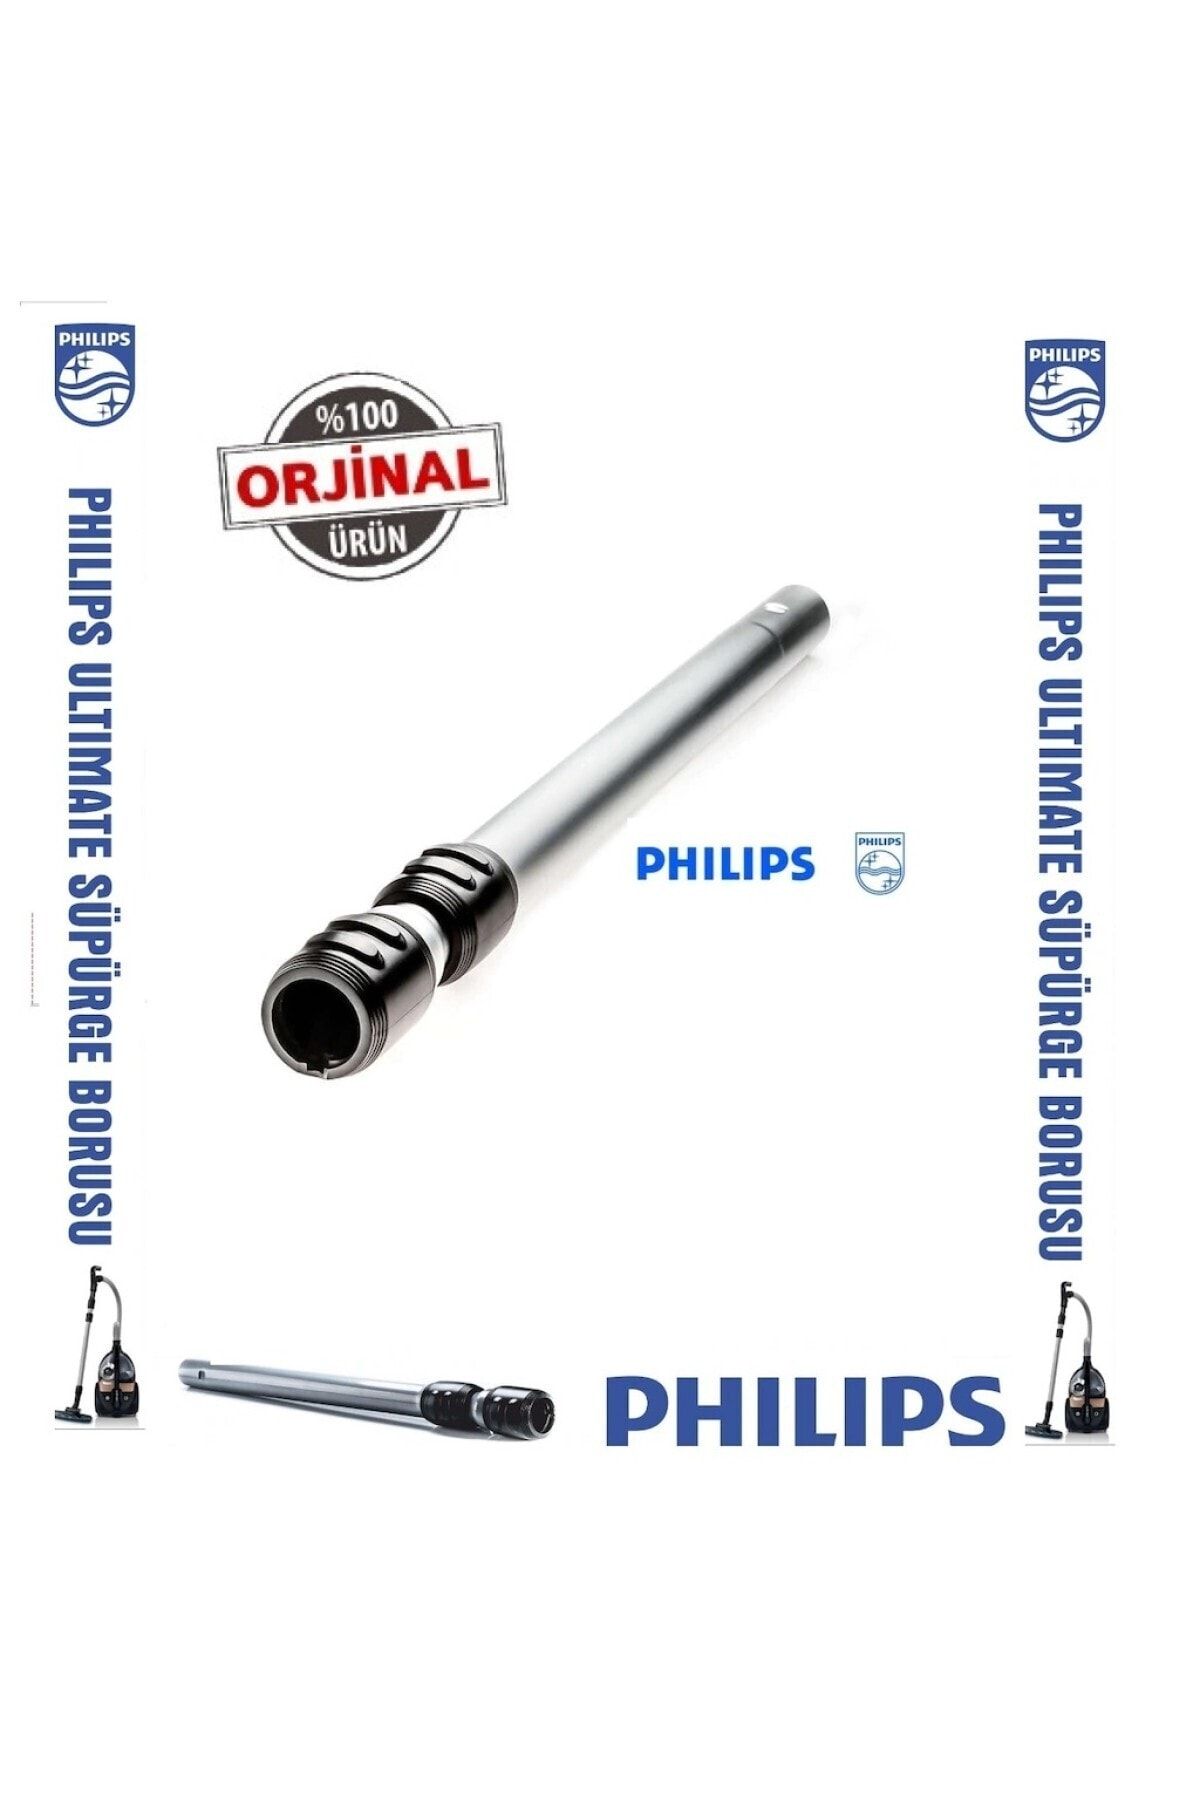 Philips Fc 9924 Marathon Ultimate Orijinal Çelik Süpürge Borusu